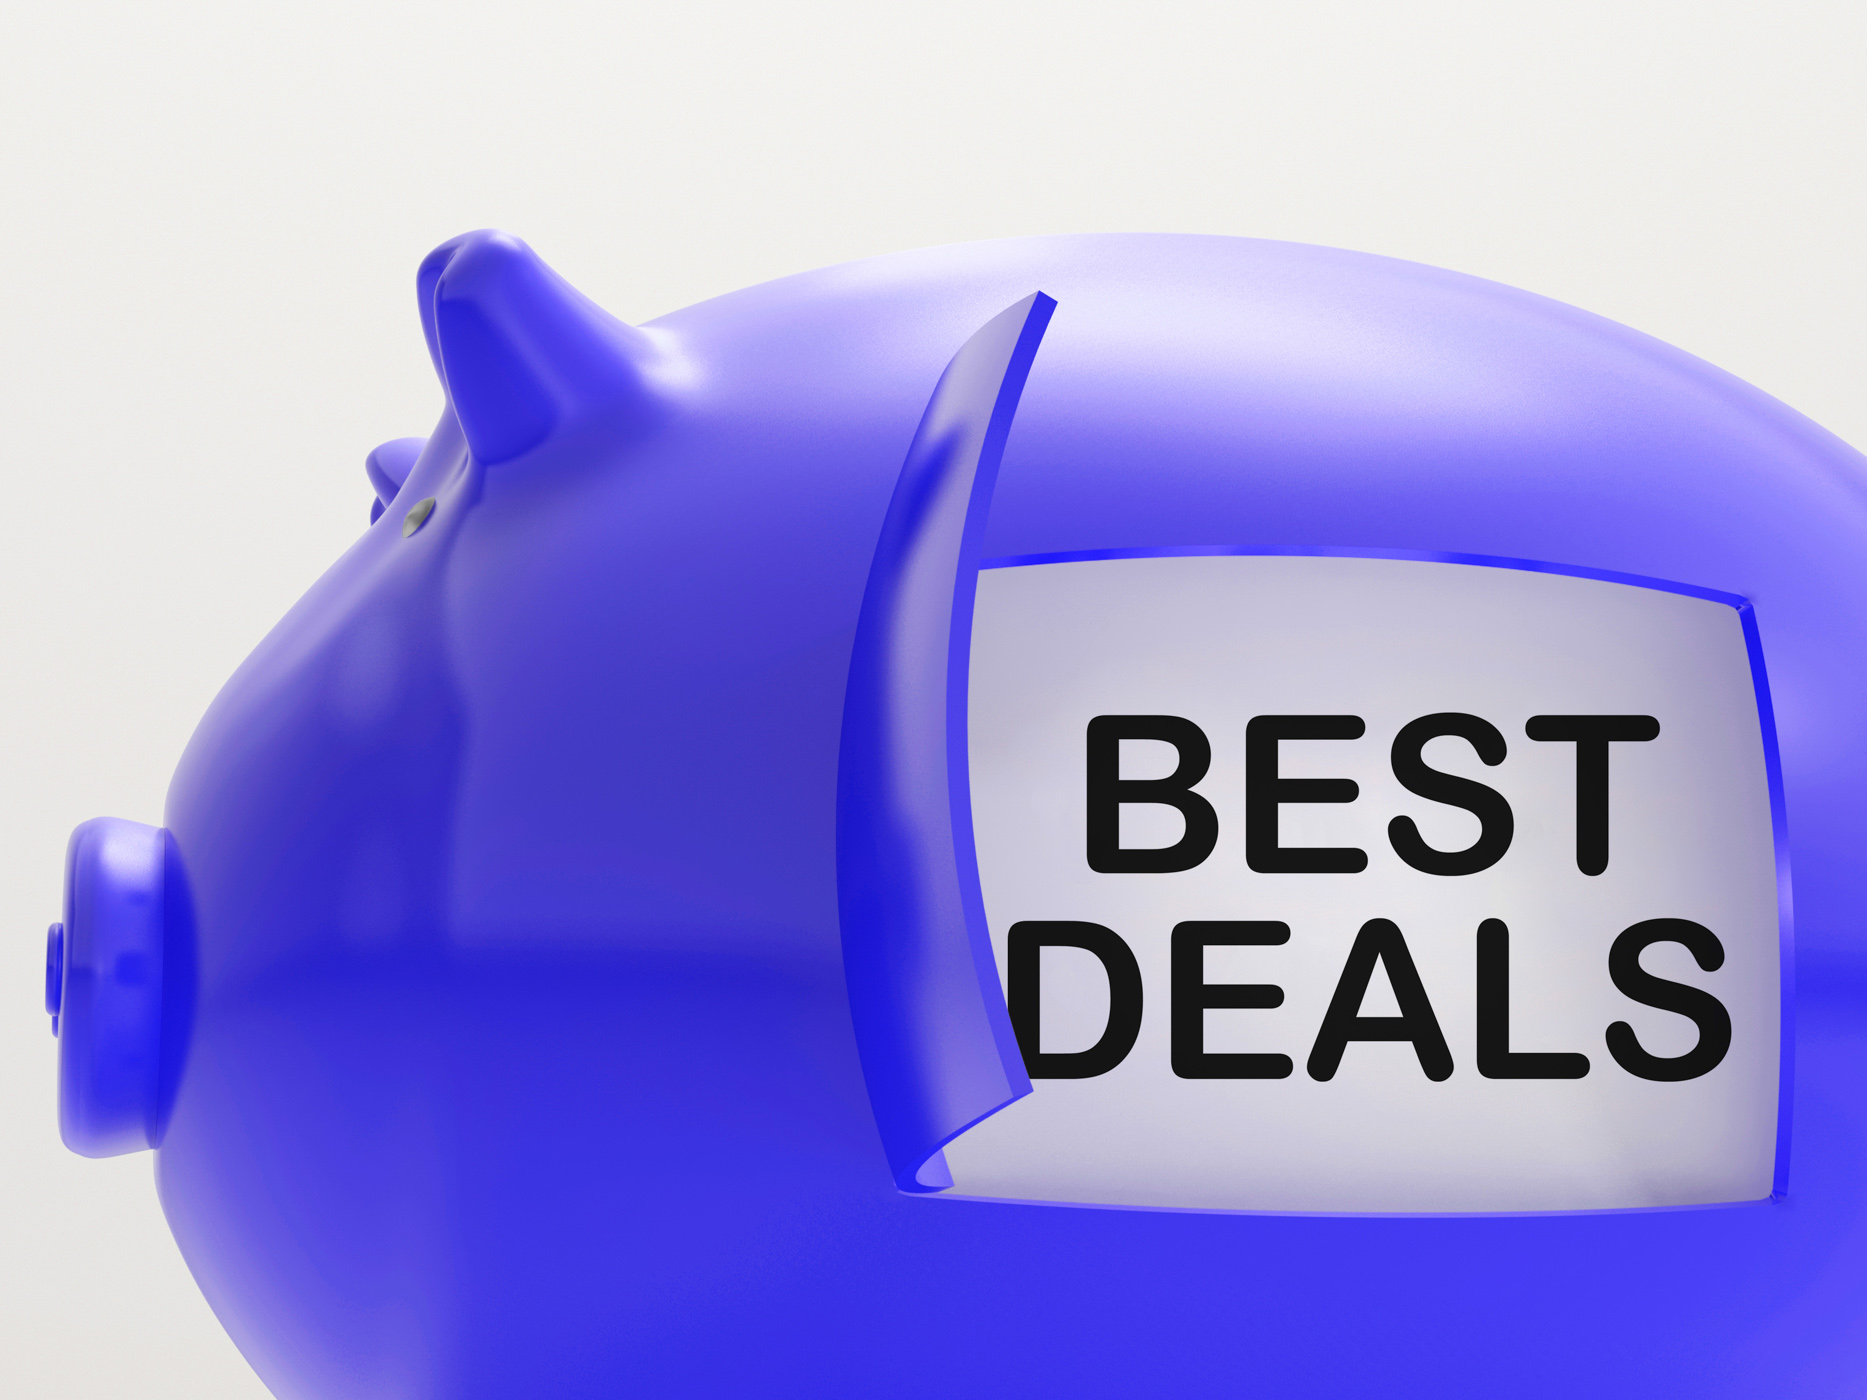 Best deals piggy bank shows great offers photo